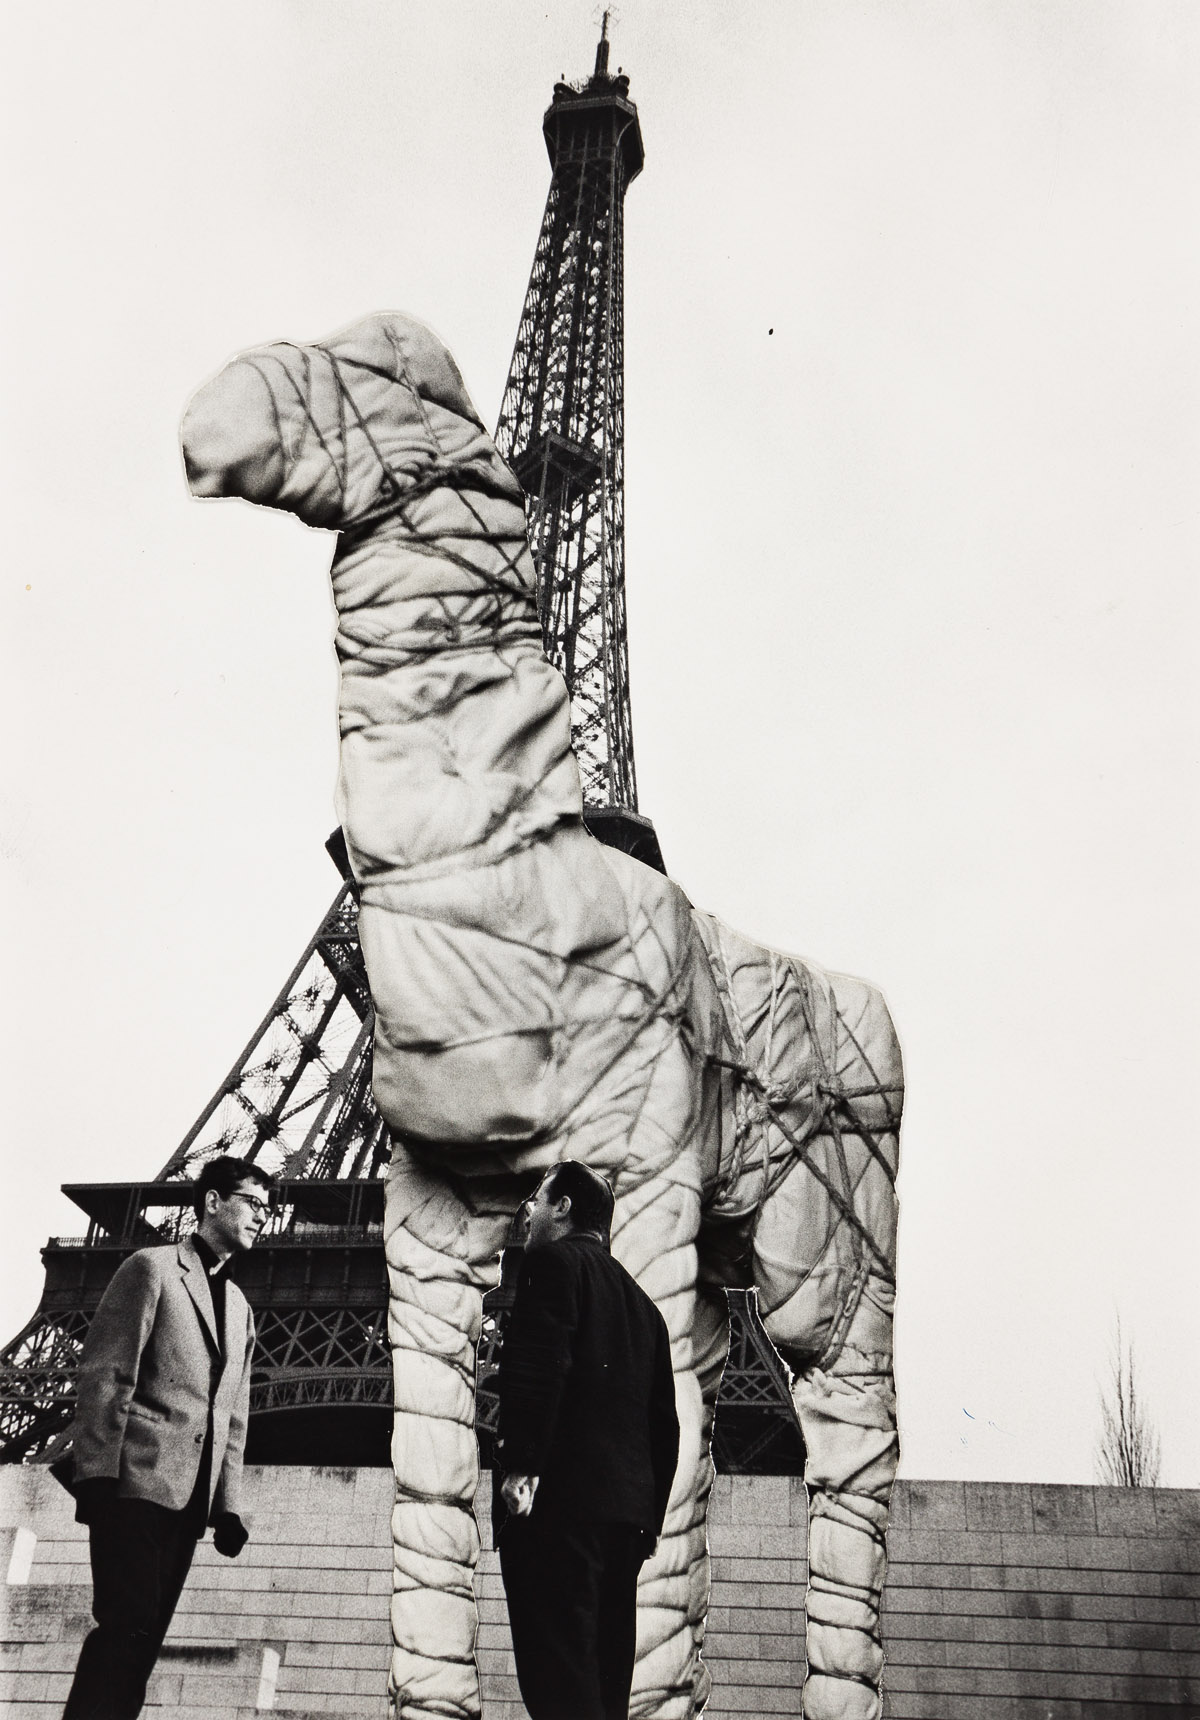 HARRY SHUNK (1924-2006) & JÁNOS KENDER (1938-2009) Christo and Raymond Hains, Néo-Dada emballe, Eiffel Tower, Paris (collage).